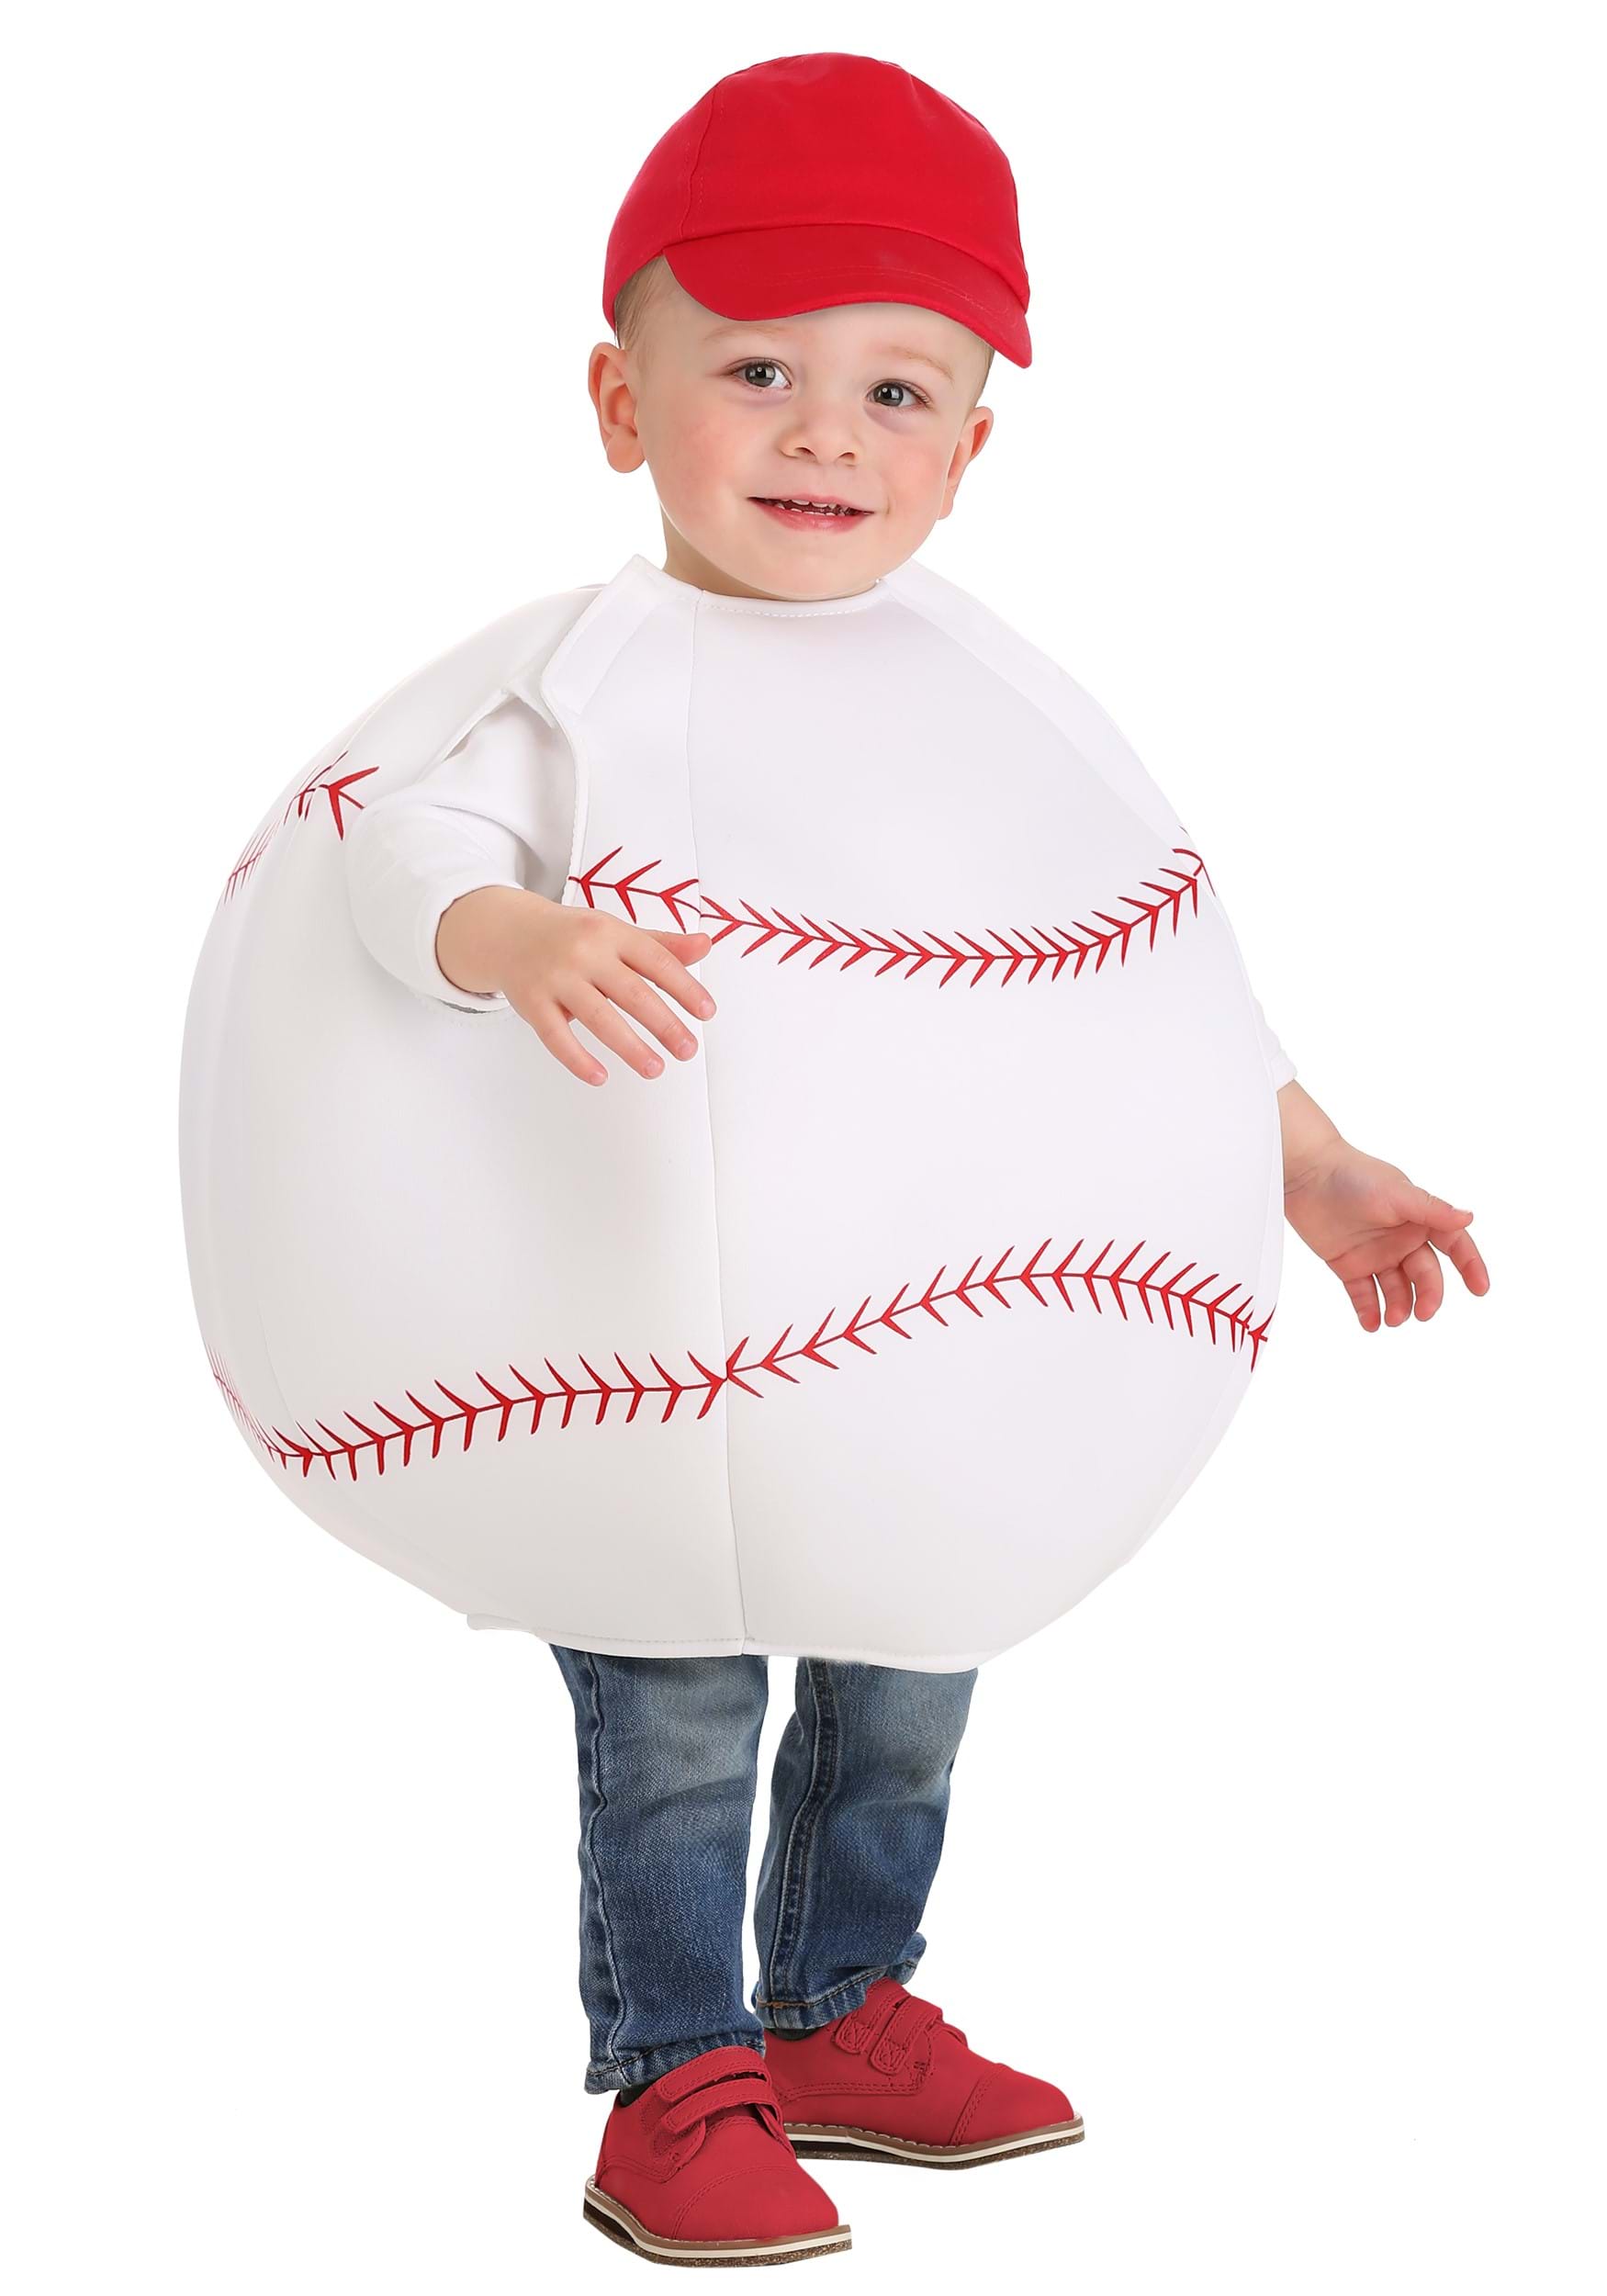 Big League Baseball Costume for Infants